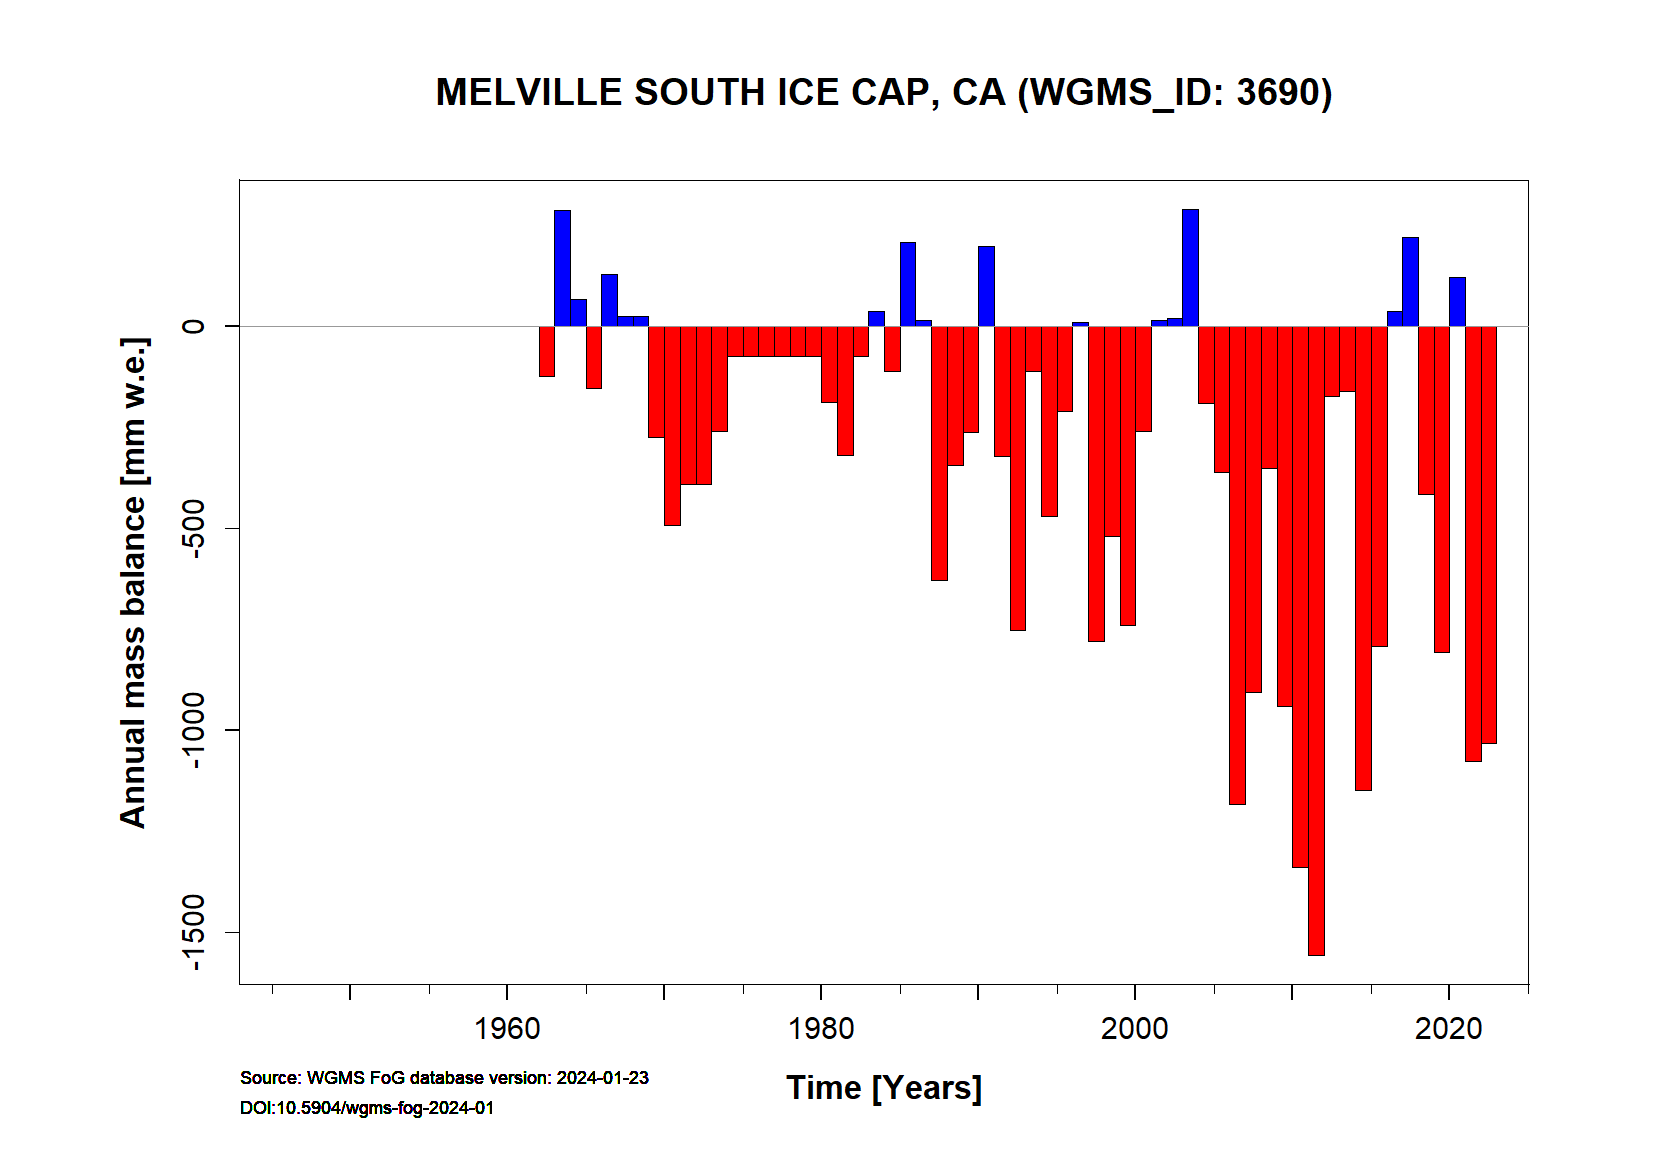 Melville South Ice Cap Annual Mass Balance (WGMS, 2016)